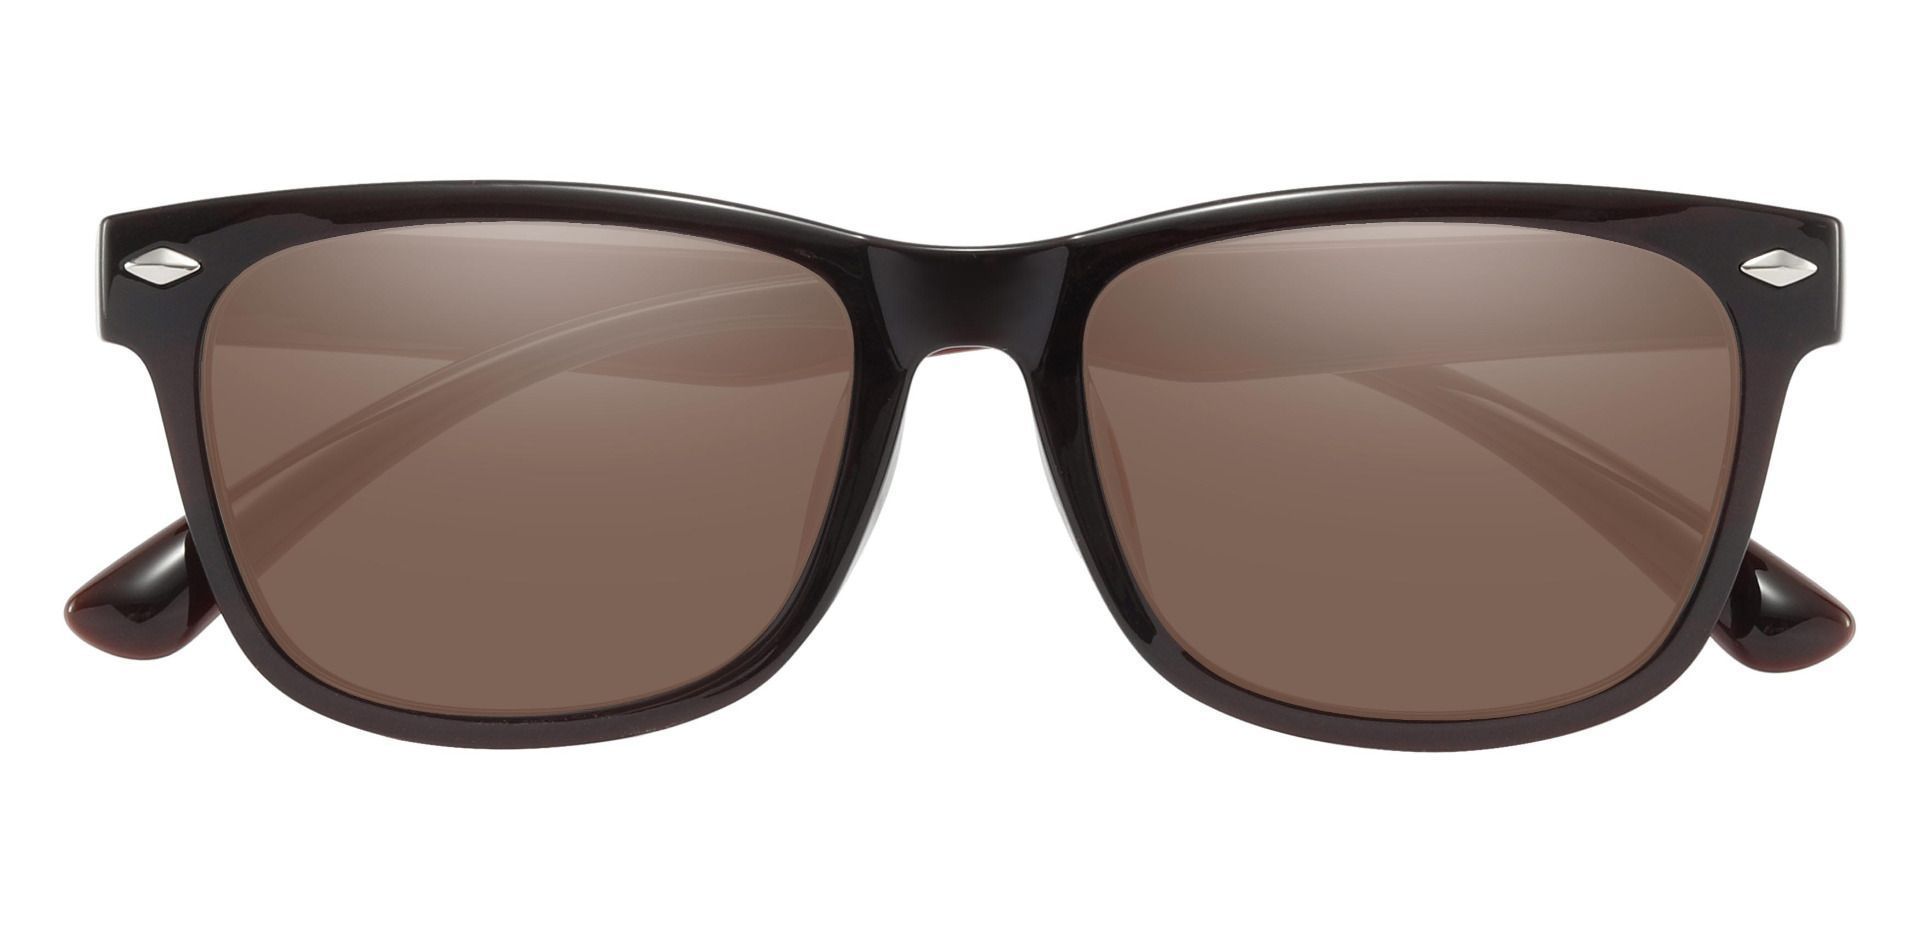 Shaler Square Prescription Sunglasses - Red Frame With Brown Lenses